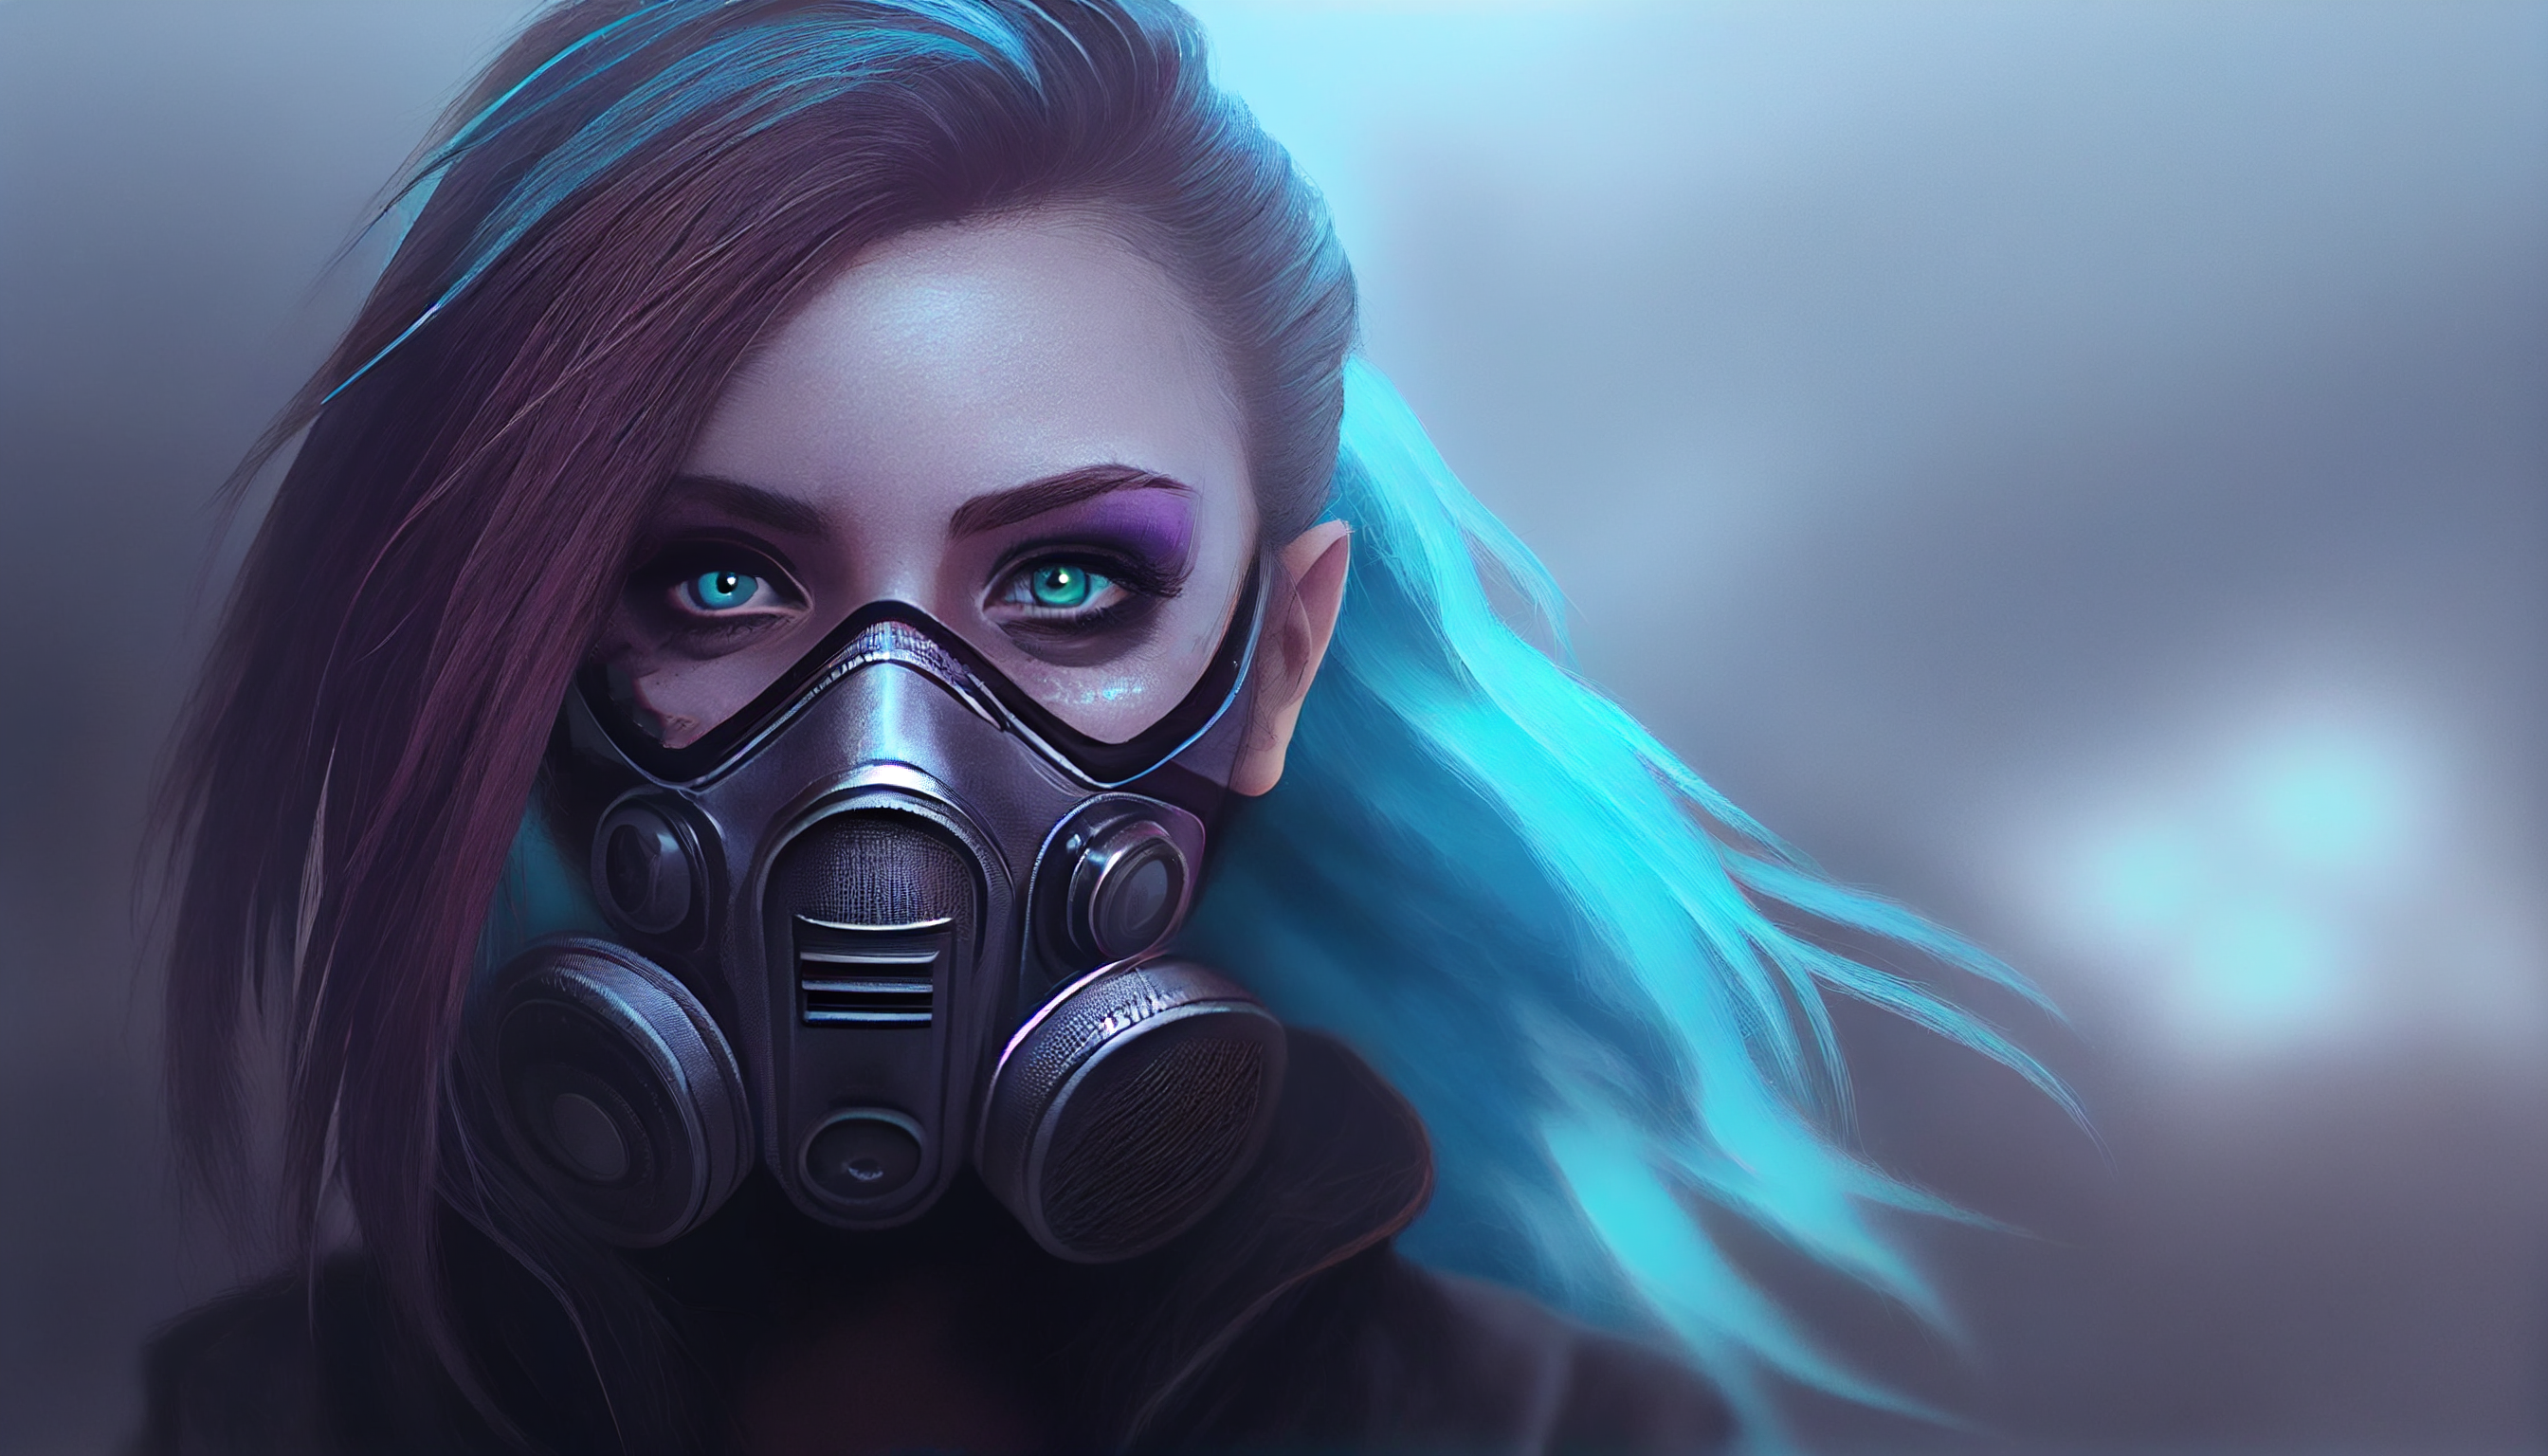 General 2688x1536 AI art women illustration gas masks blue hair cyberpunk mask blue eyes